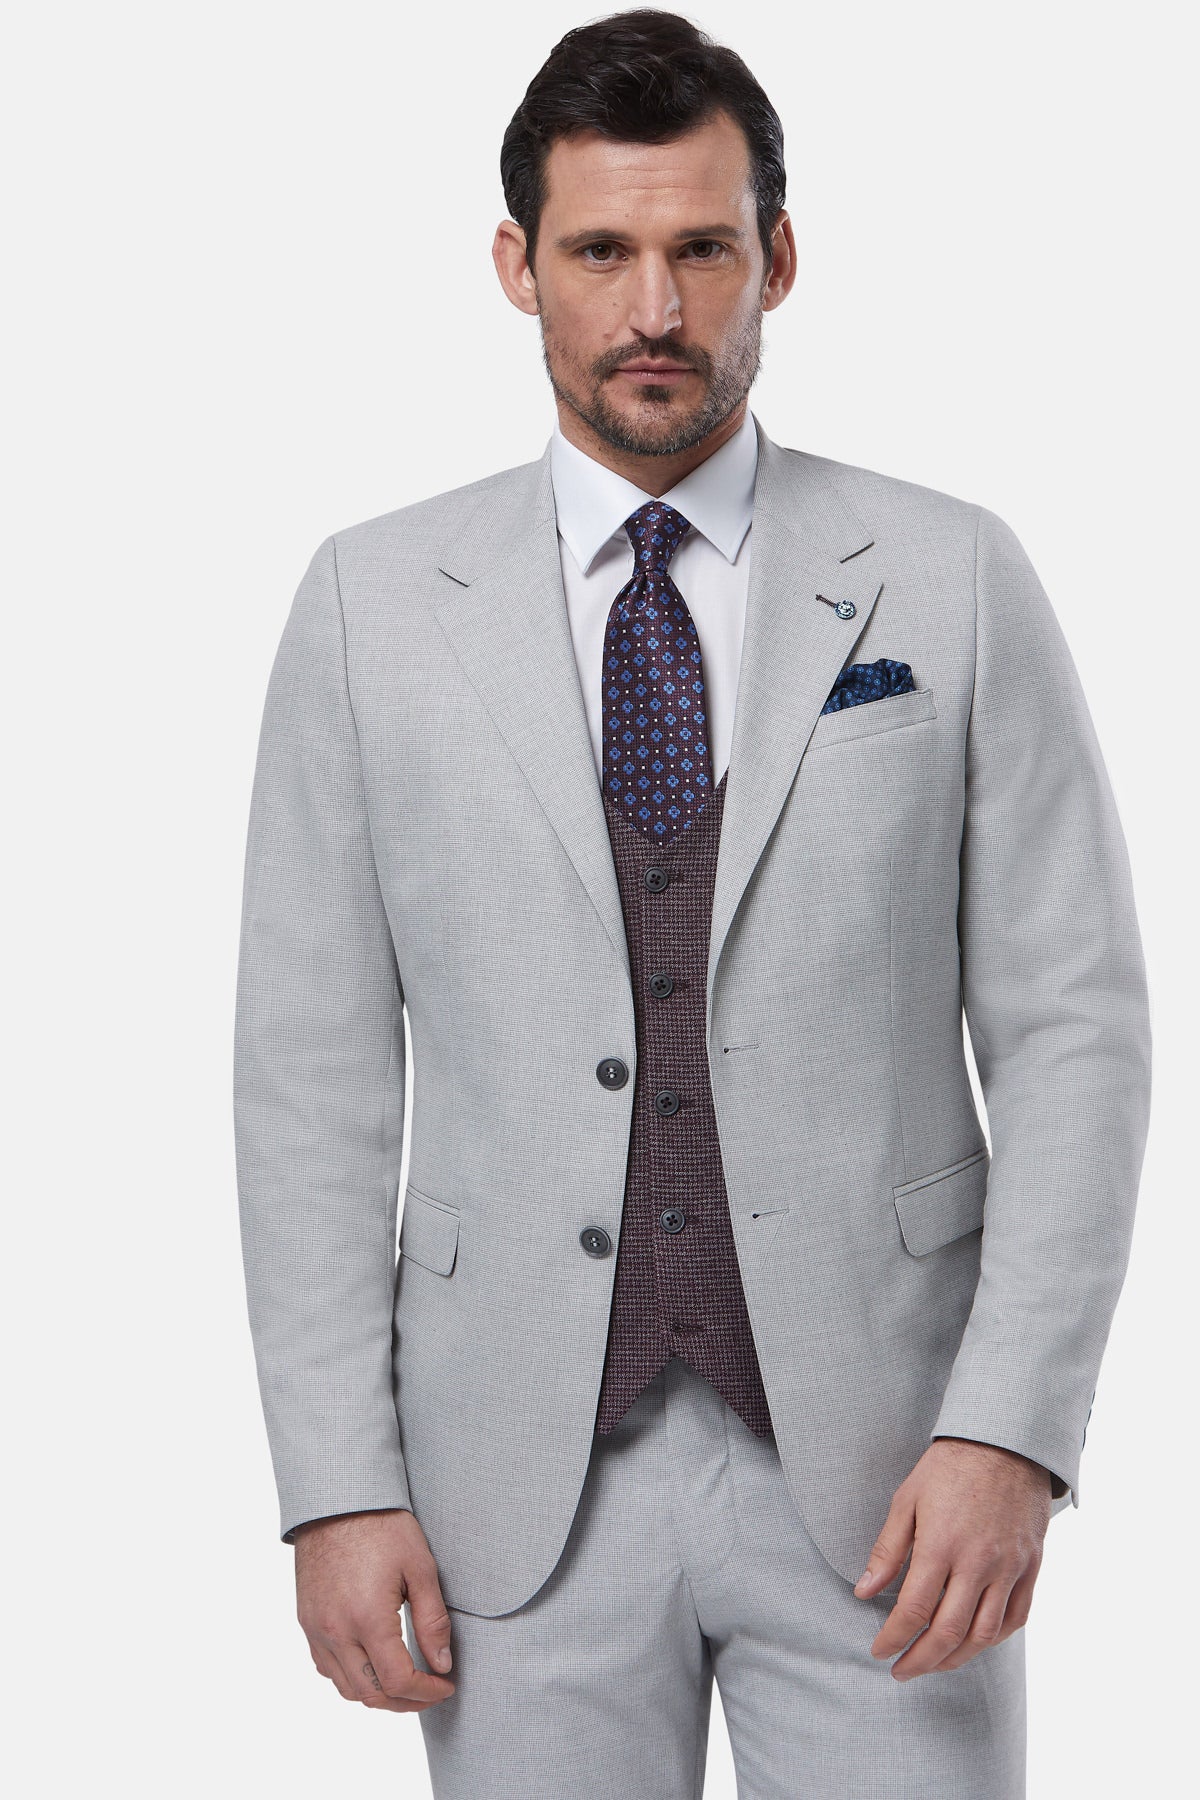 London Silver 3 Piece Suit waistcoat